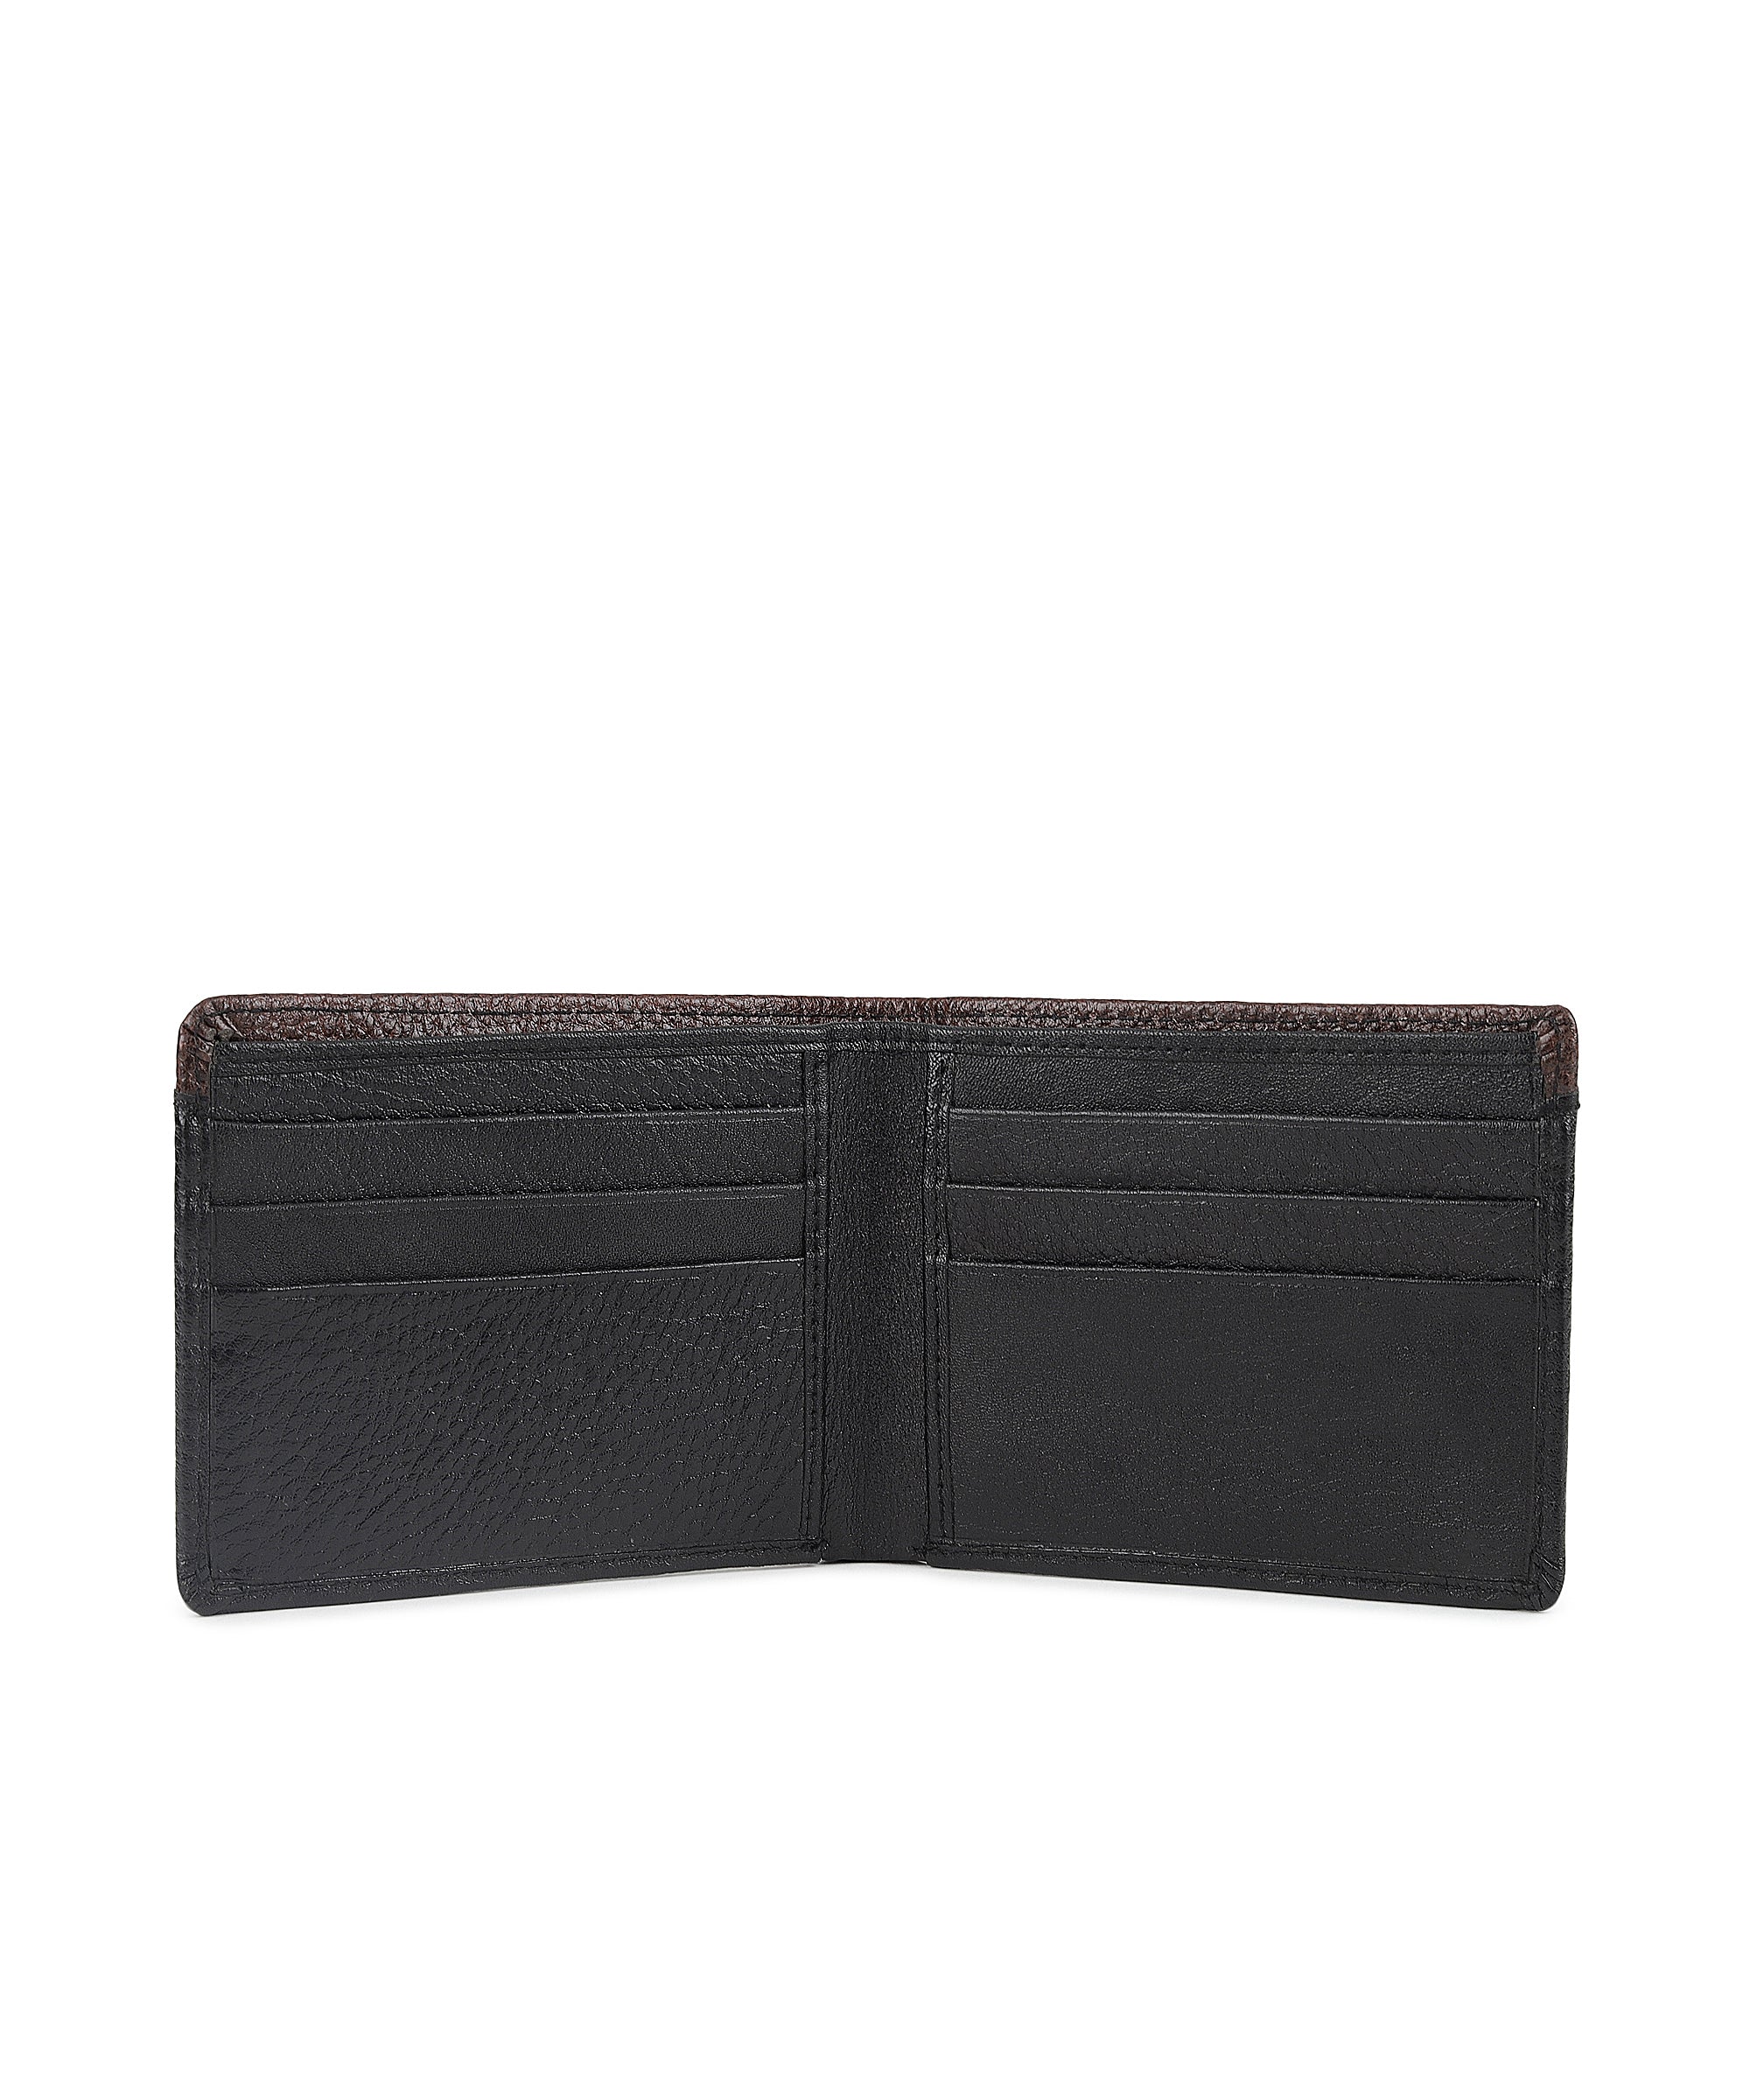 Urbano Fashion Men's Casual, Formal Black Genuine Leather Wallet-6 Card Slots